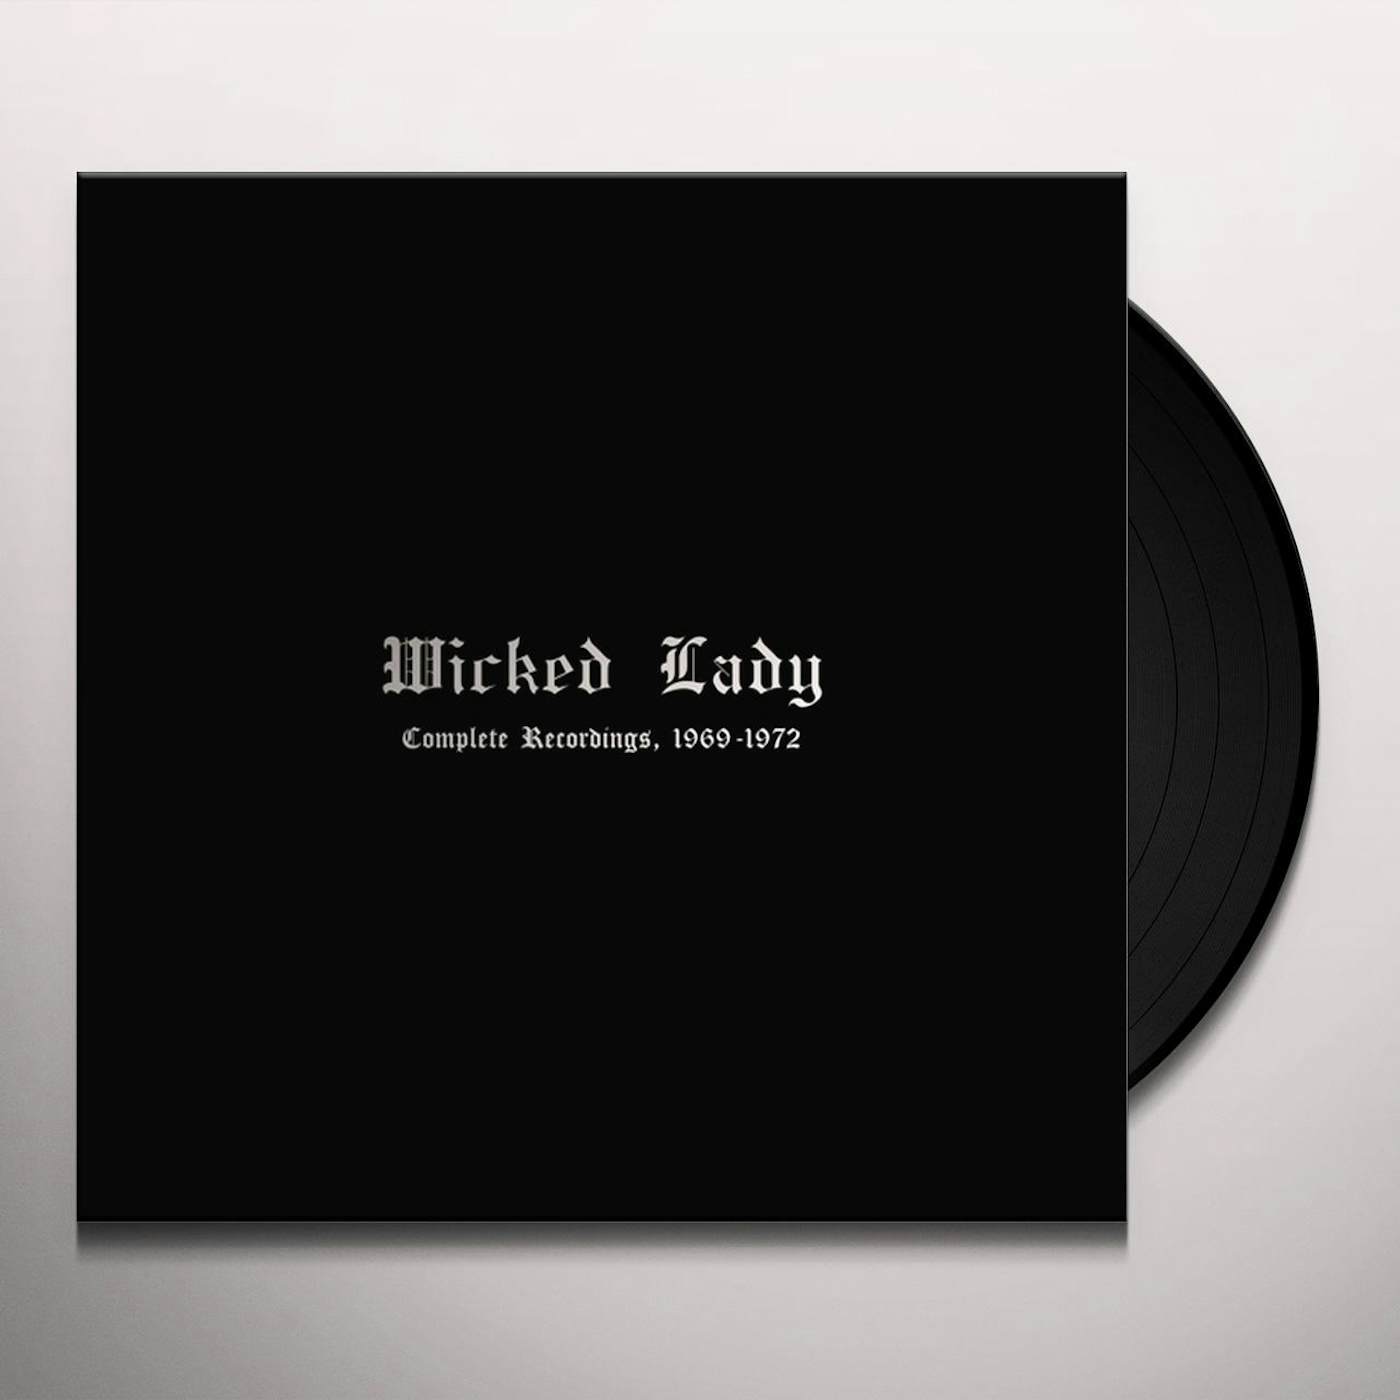 Wicked Lady COMPLETE RECORDINGS 1969-1972 Vinyl Record